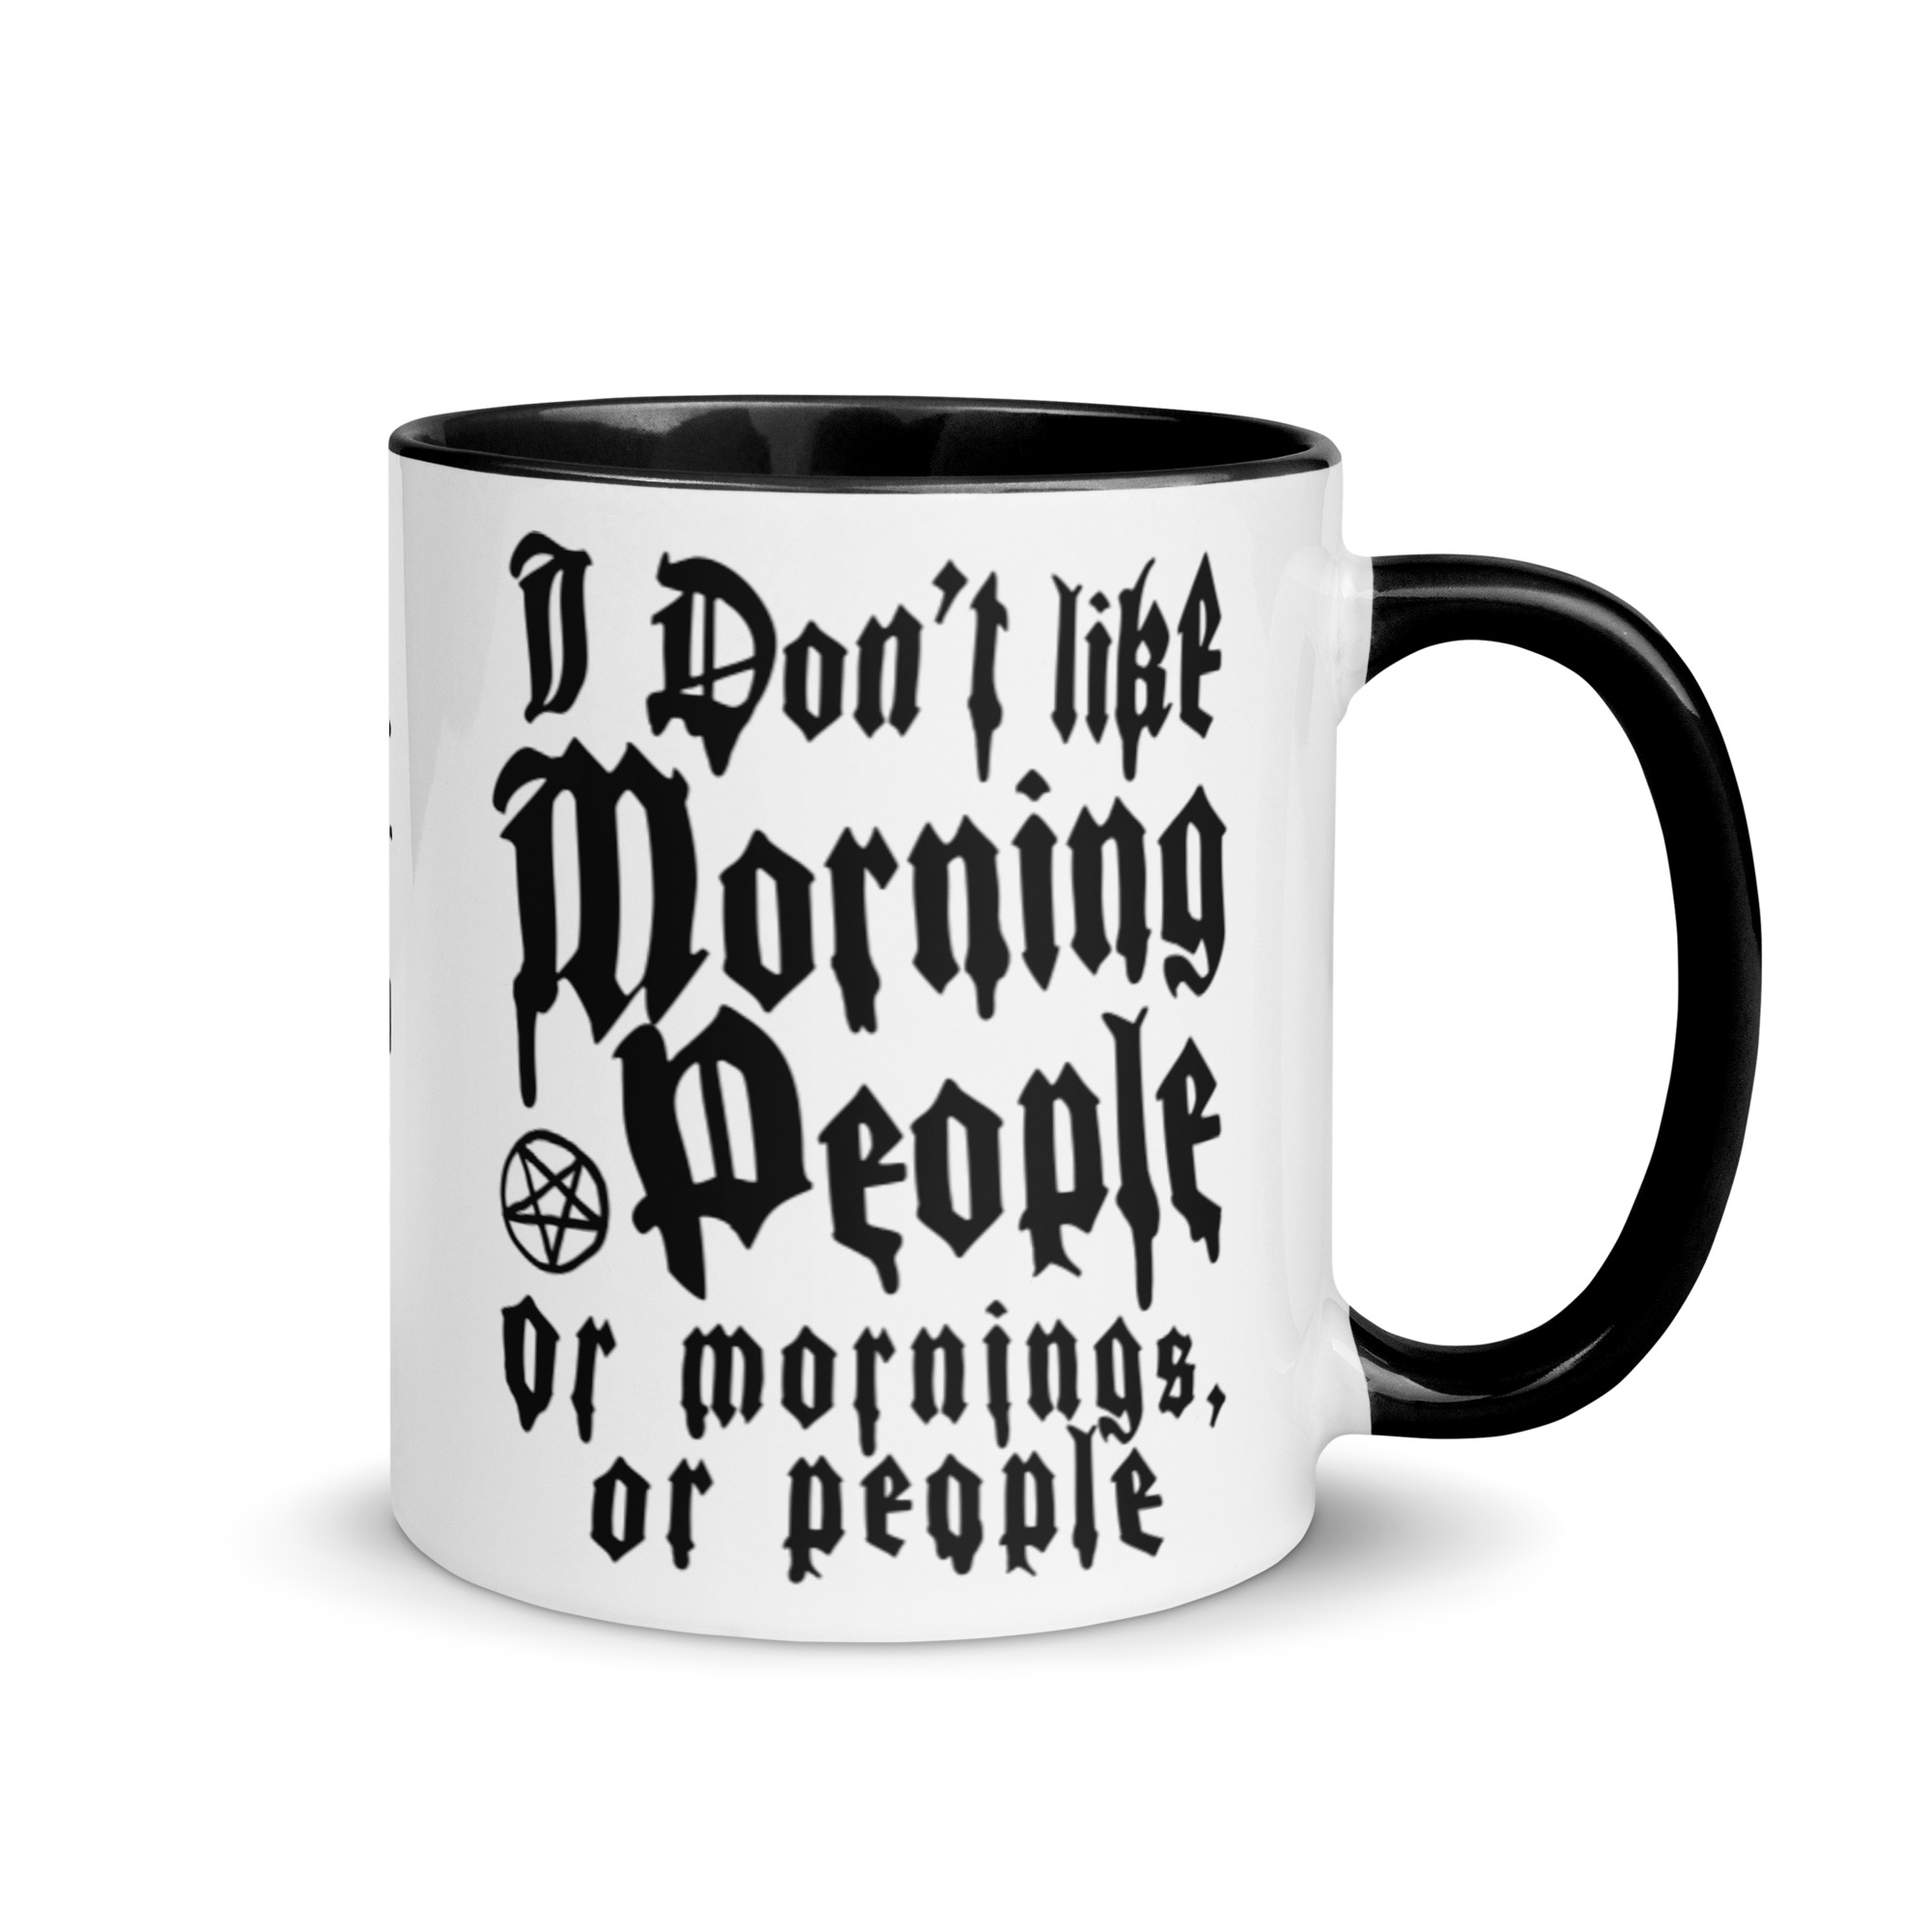 Featured image for “I don’t like morning people - Mug”